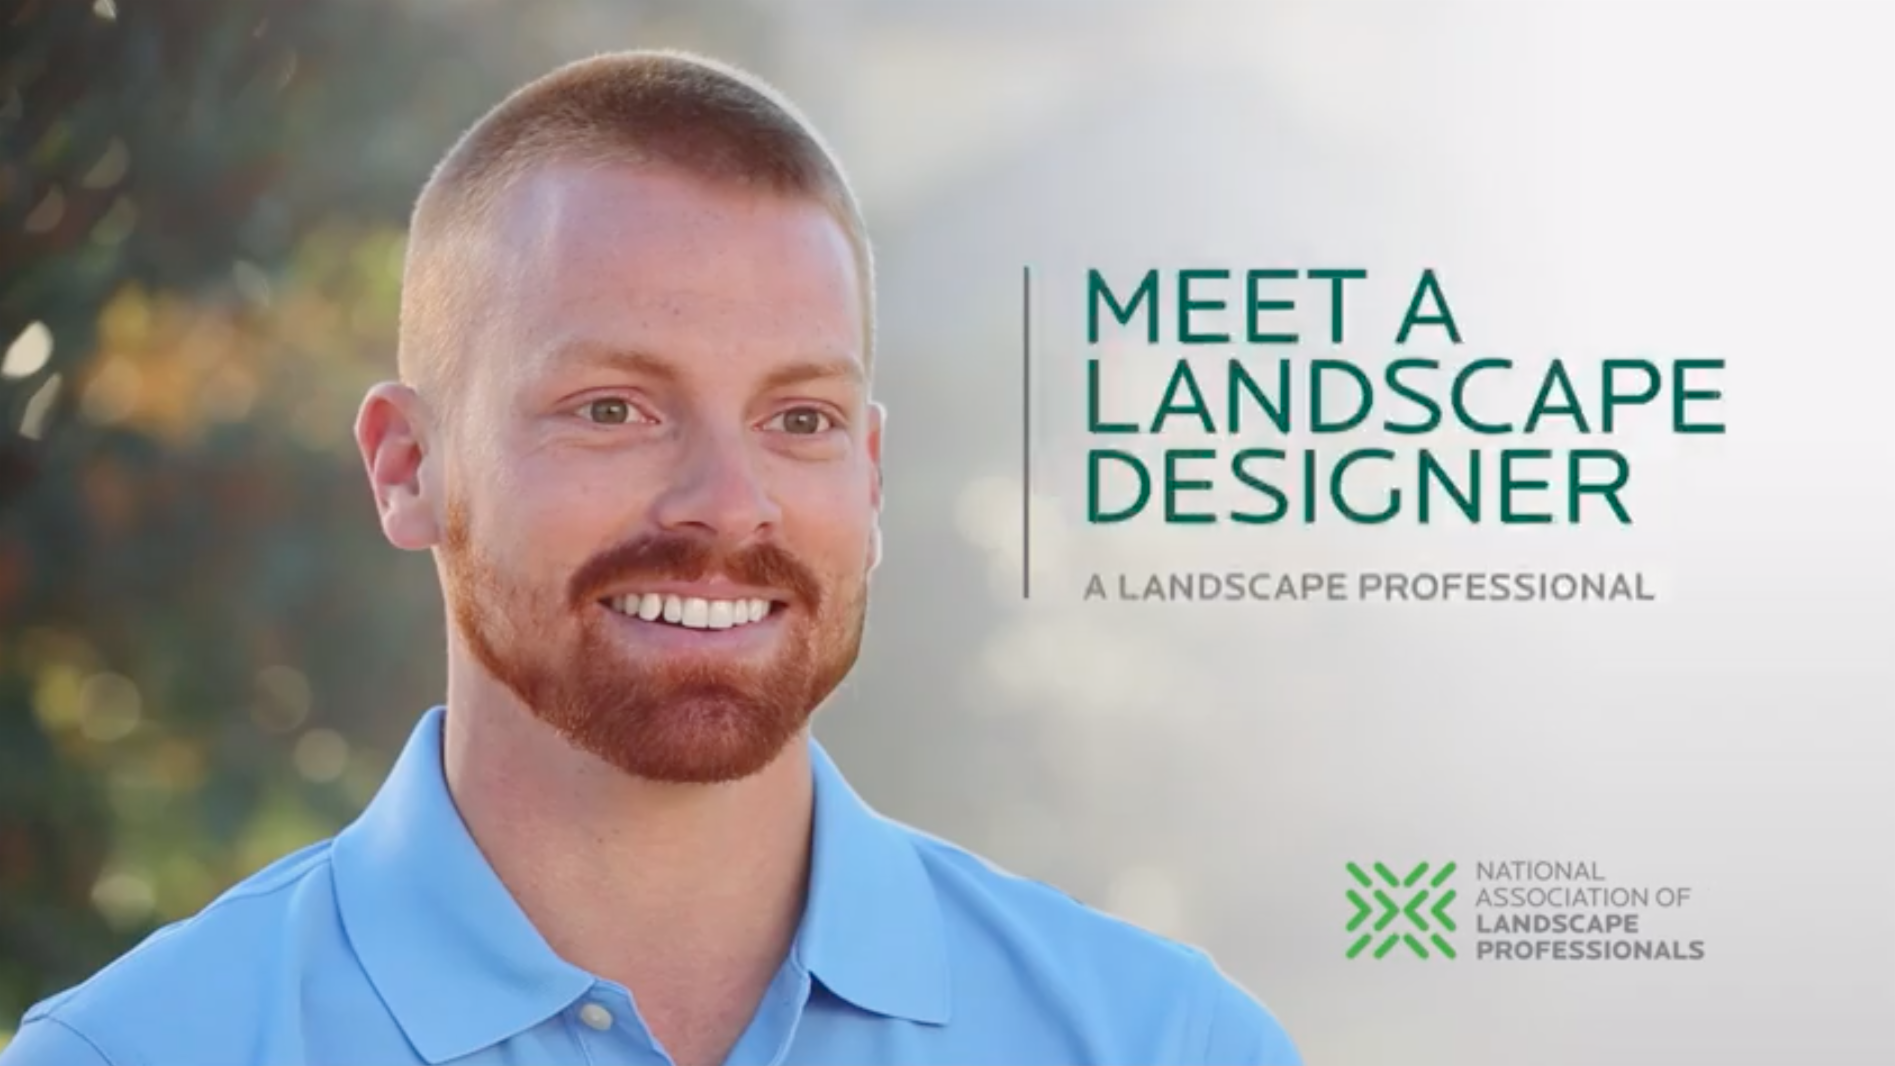 Meet a Landscape Designer - Landscape Industry Testimonial Videos